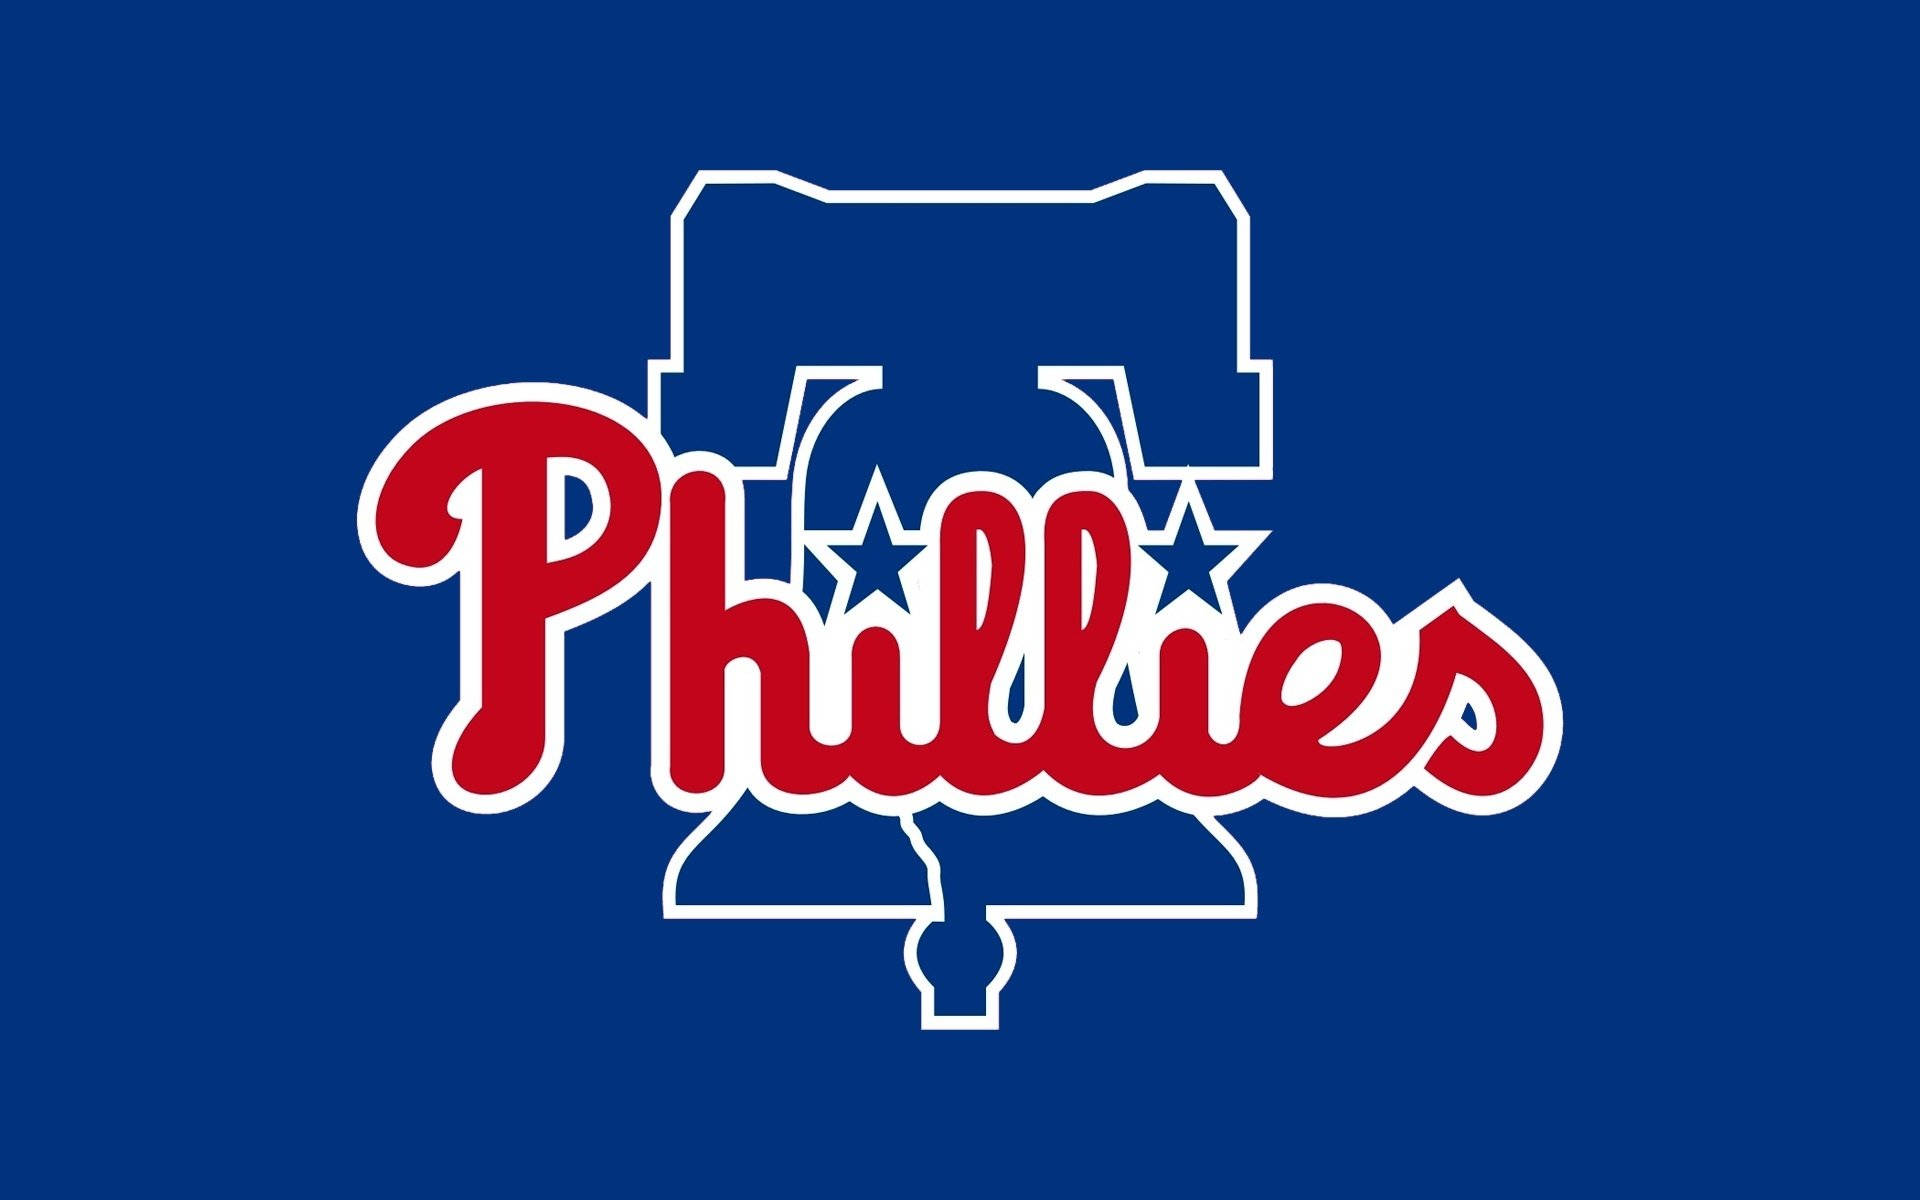 Philadelphia Phillies Logo On A Vibrant Blue Background Background